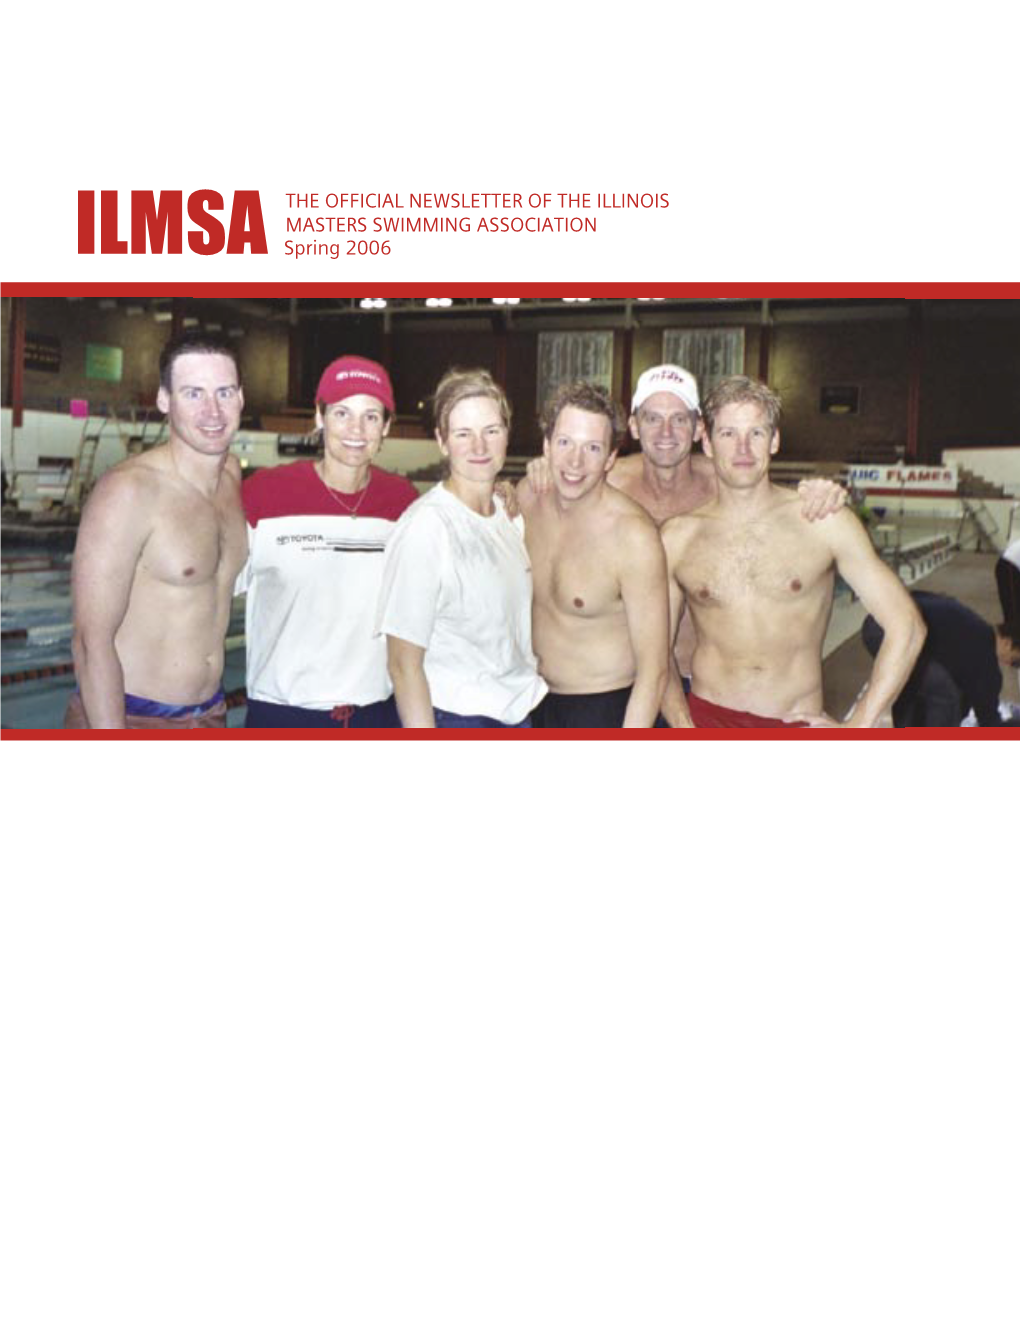 ILMSA Spring 2006 Newsletter